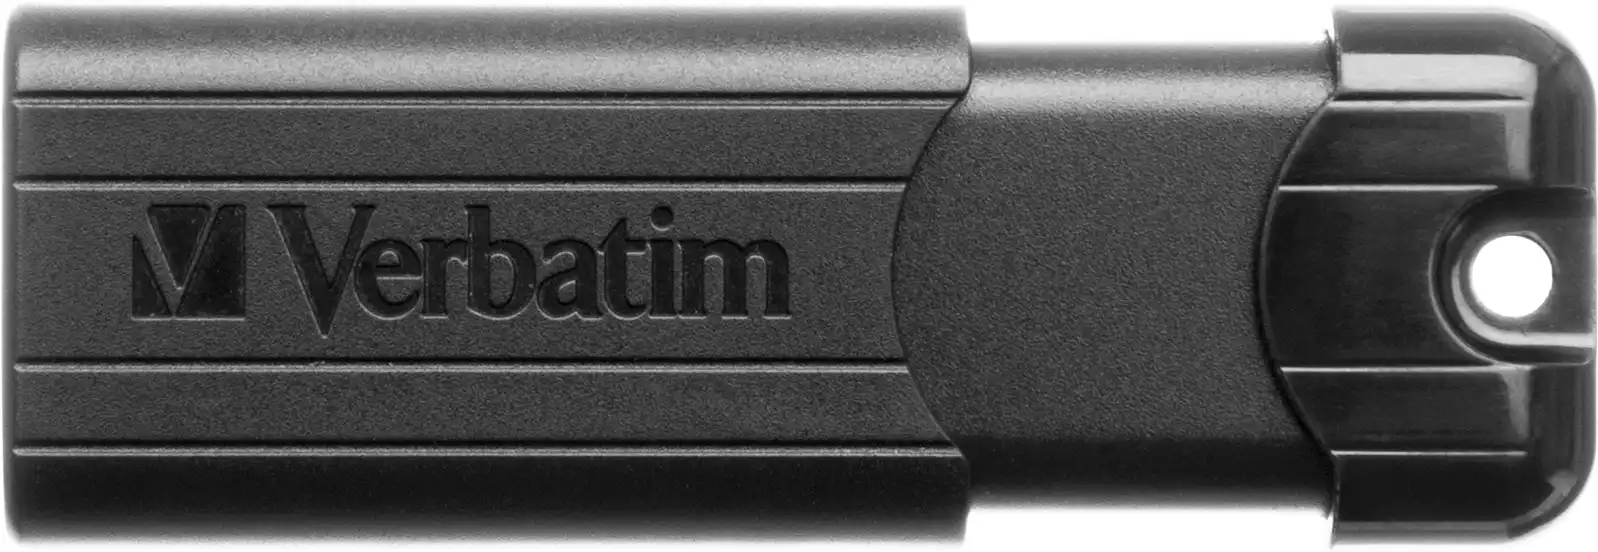 Verbatim Pinstripe Microban 32GB USB 3.0 Memory Stick Drive For PC/Laptop Black